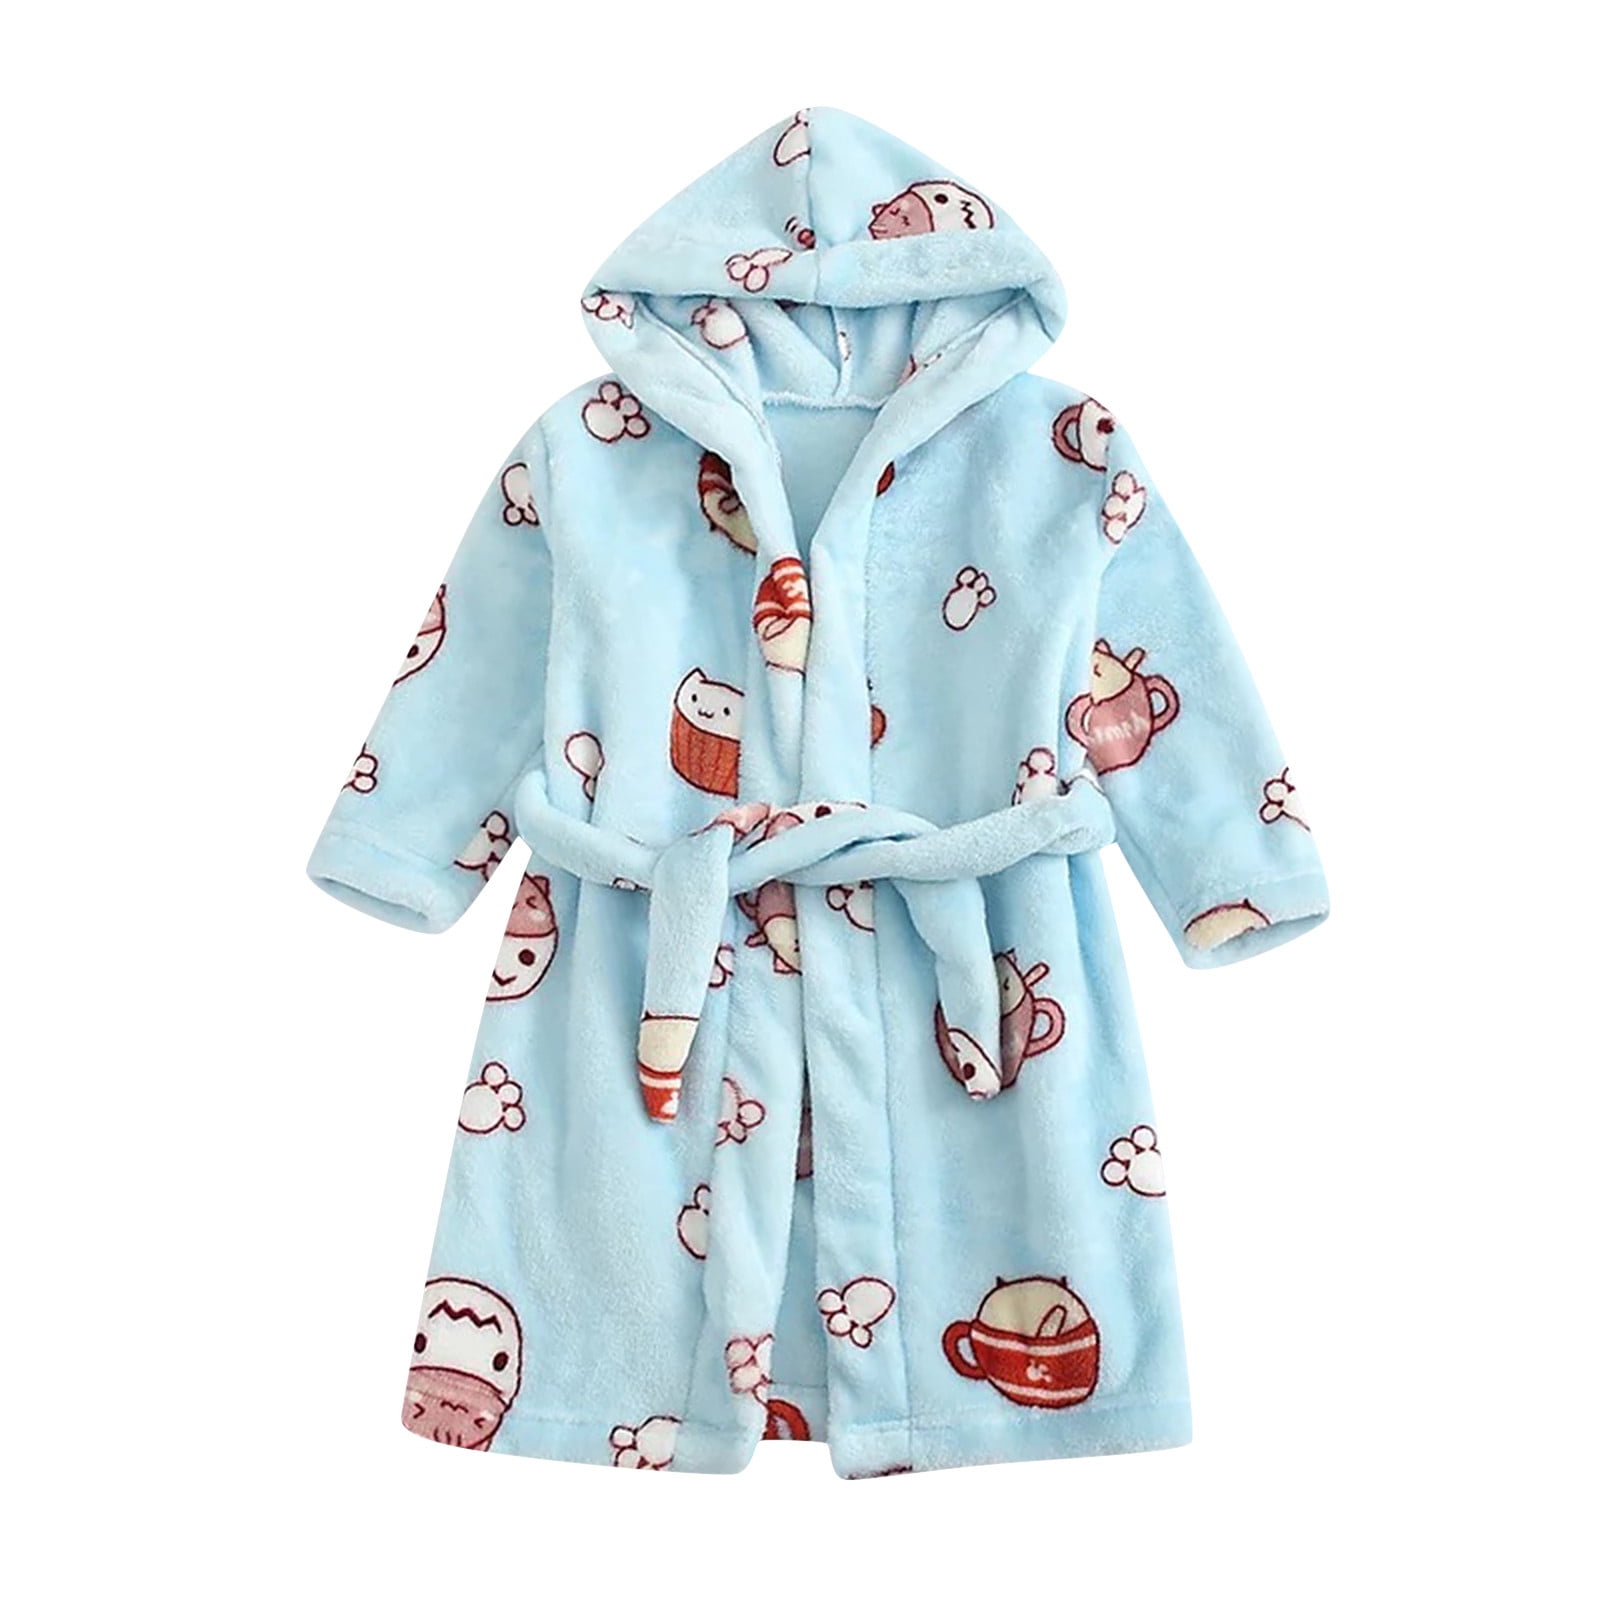 2PCS Infant Boy Girl Cute Cartoon Duck Hooded Flannel Bathrobes Sleepwear Outfit 